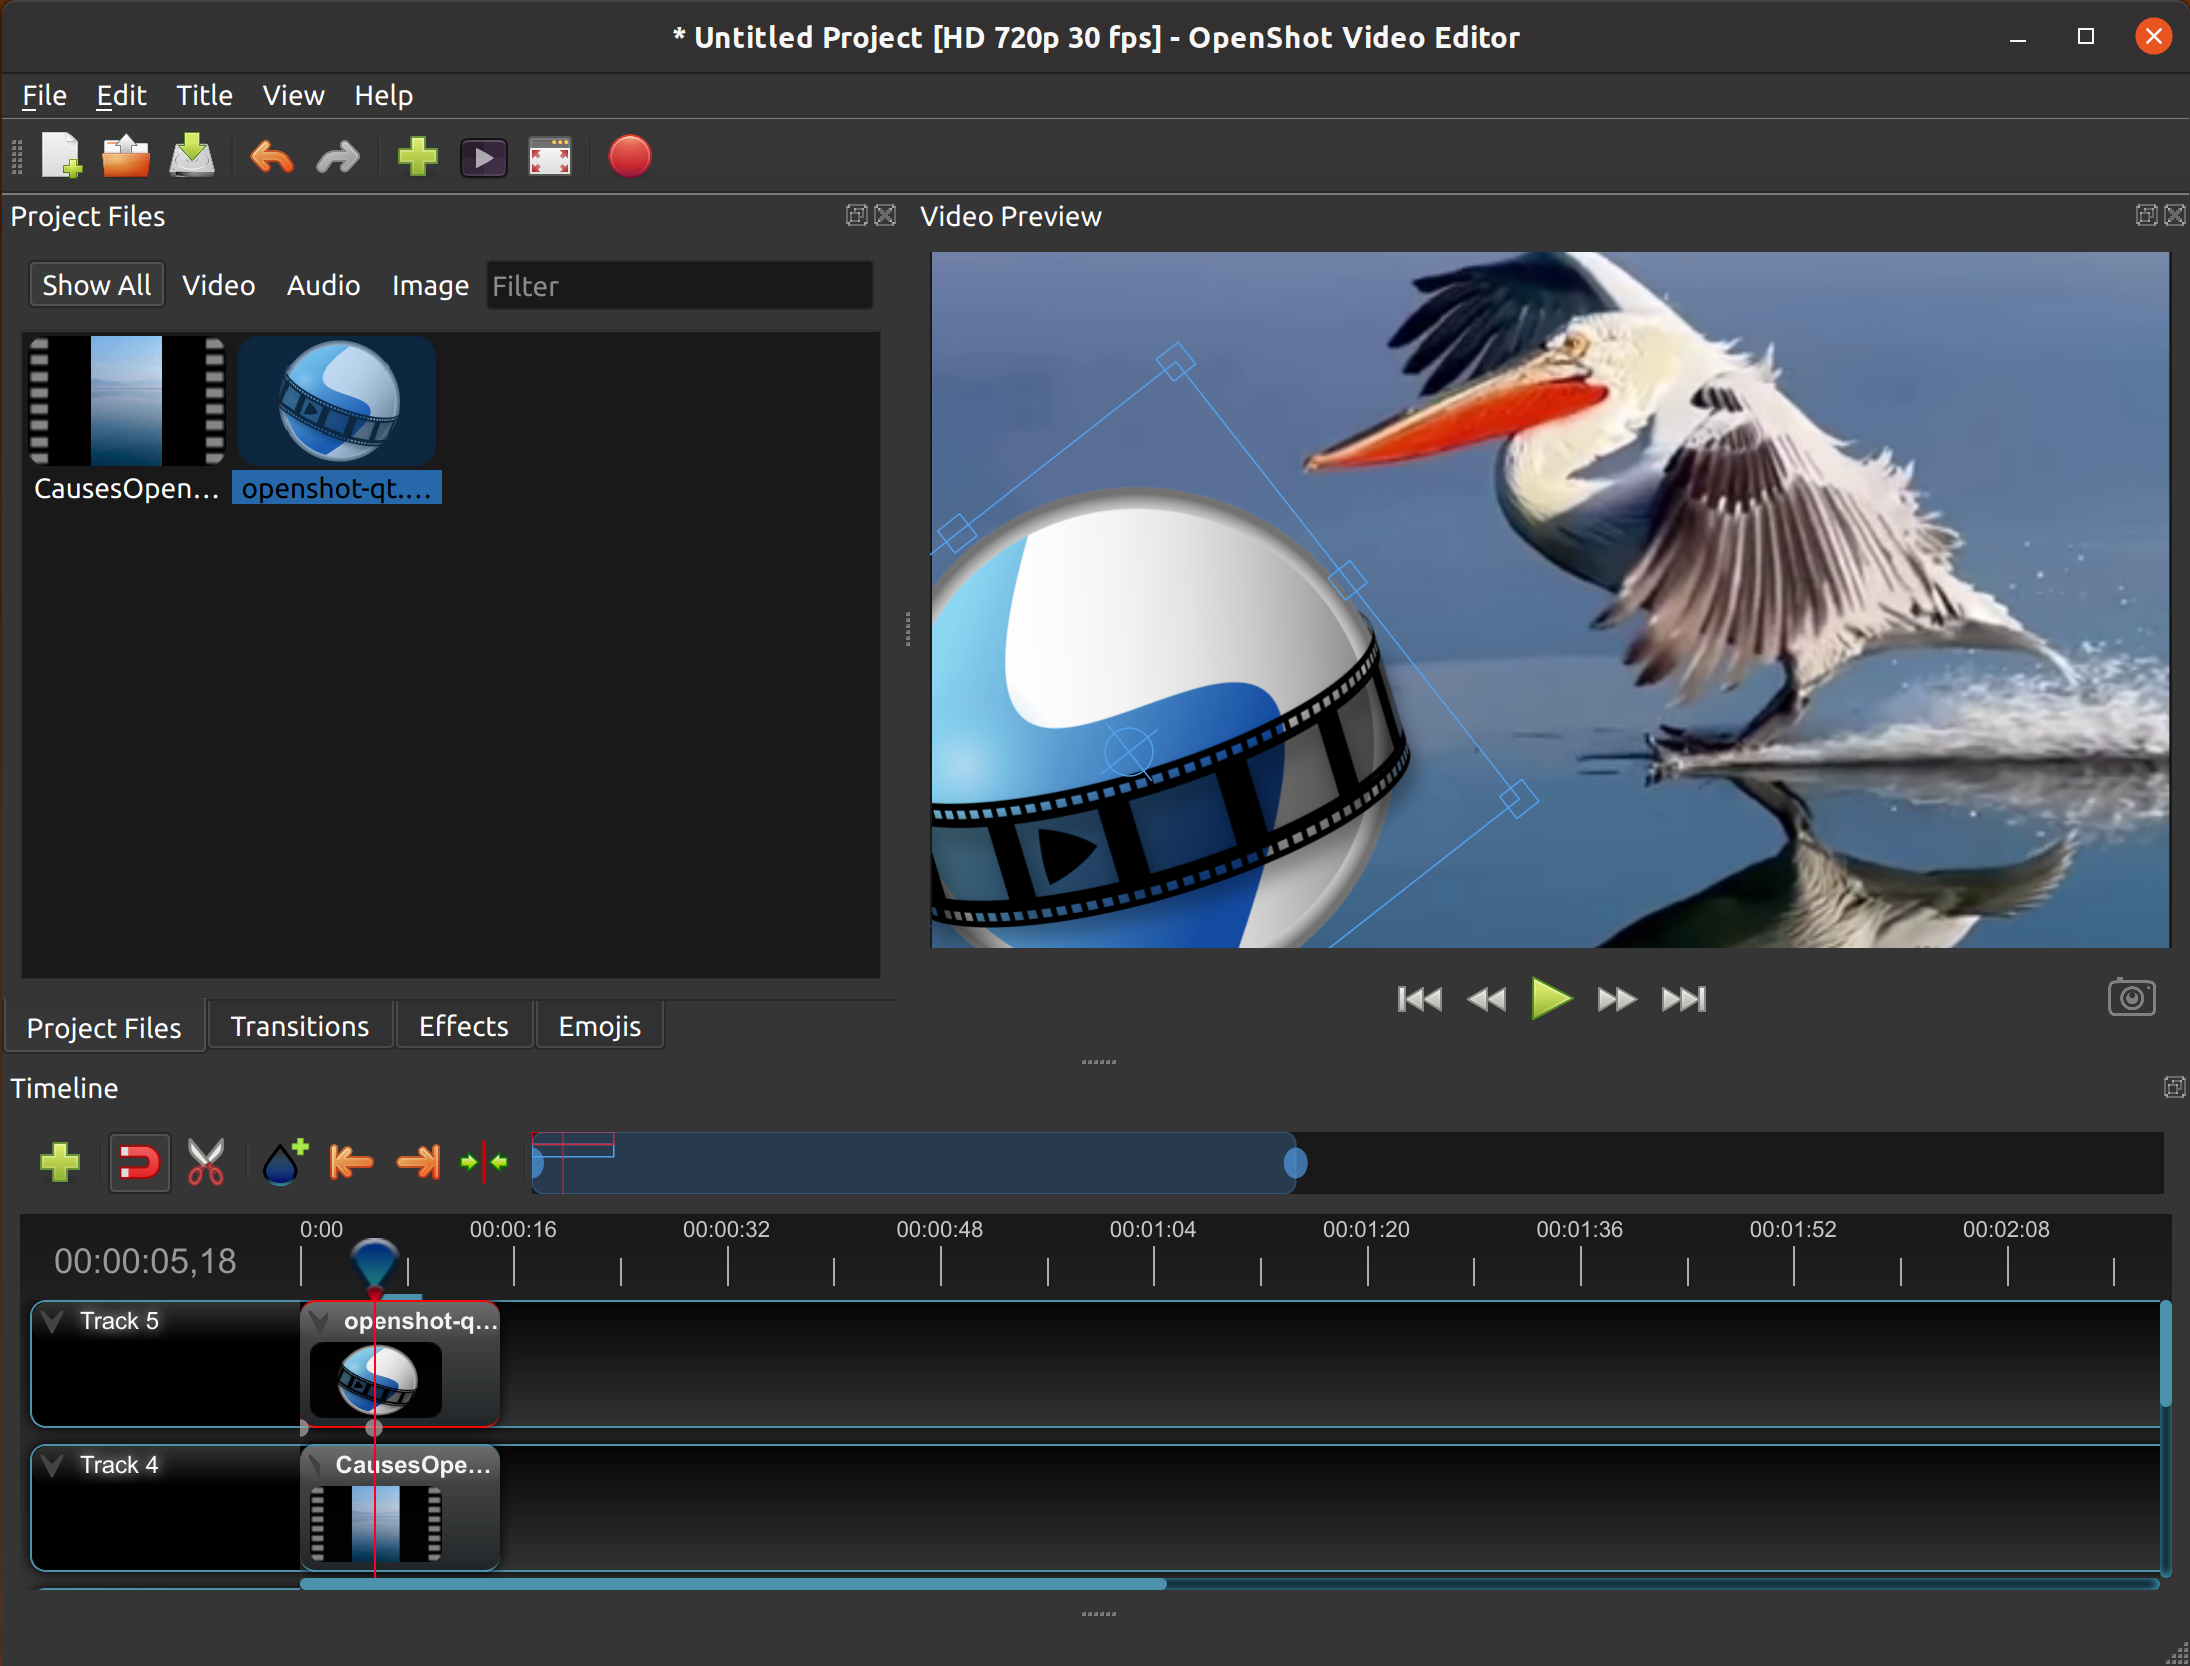 OpenShot Video Editor 3.1.1 - main user interface screen